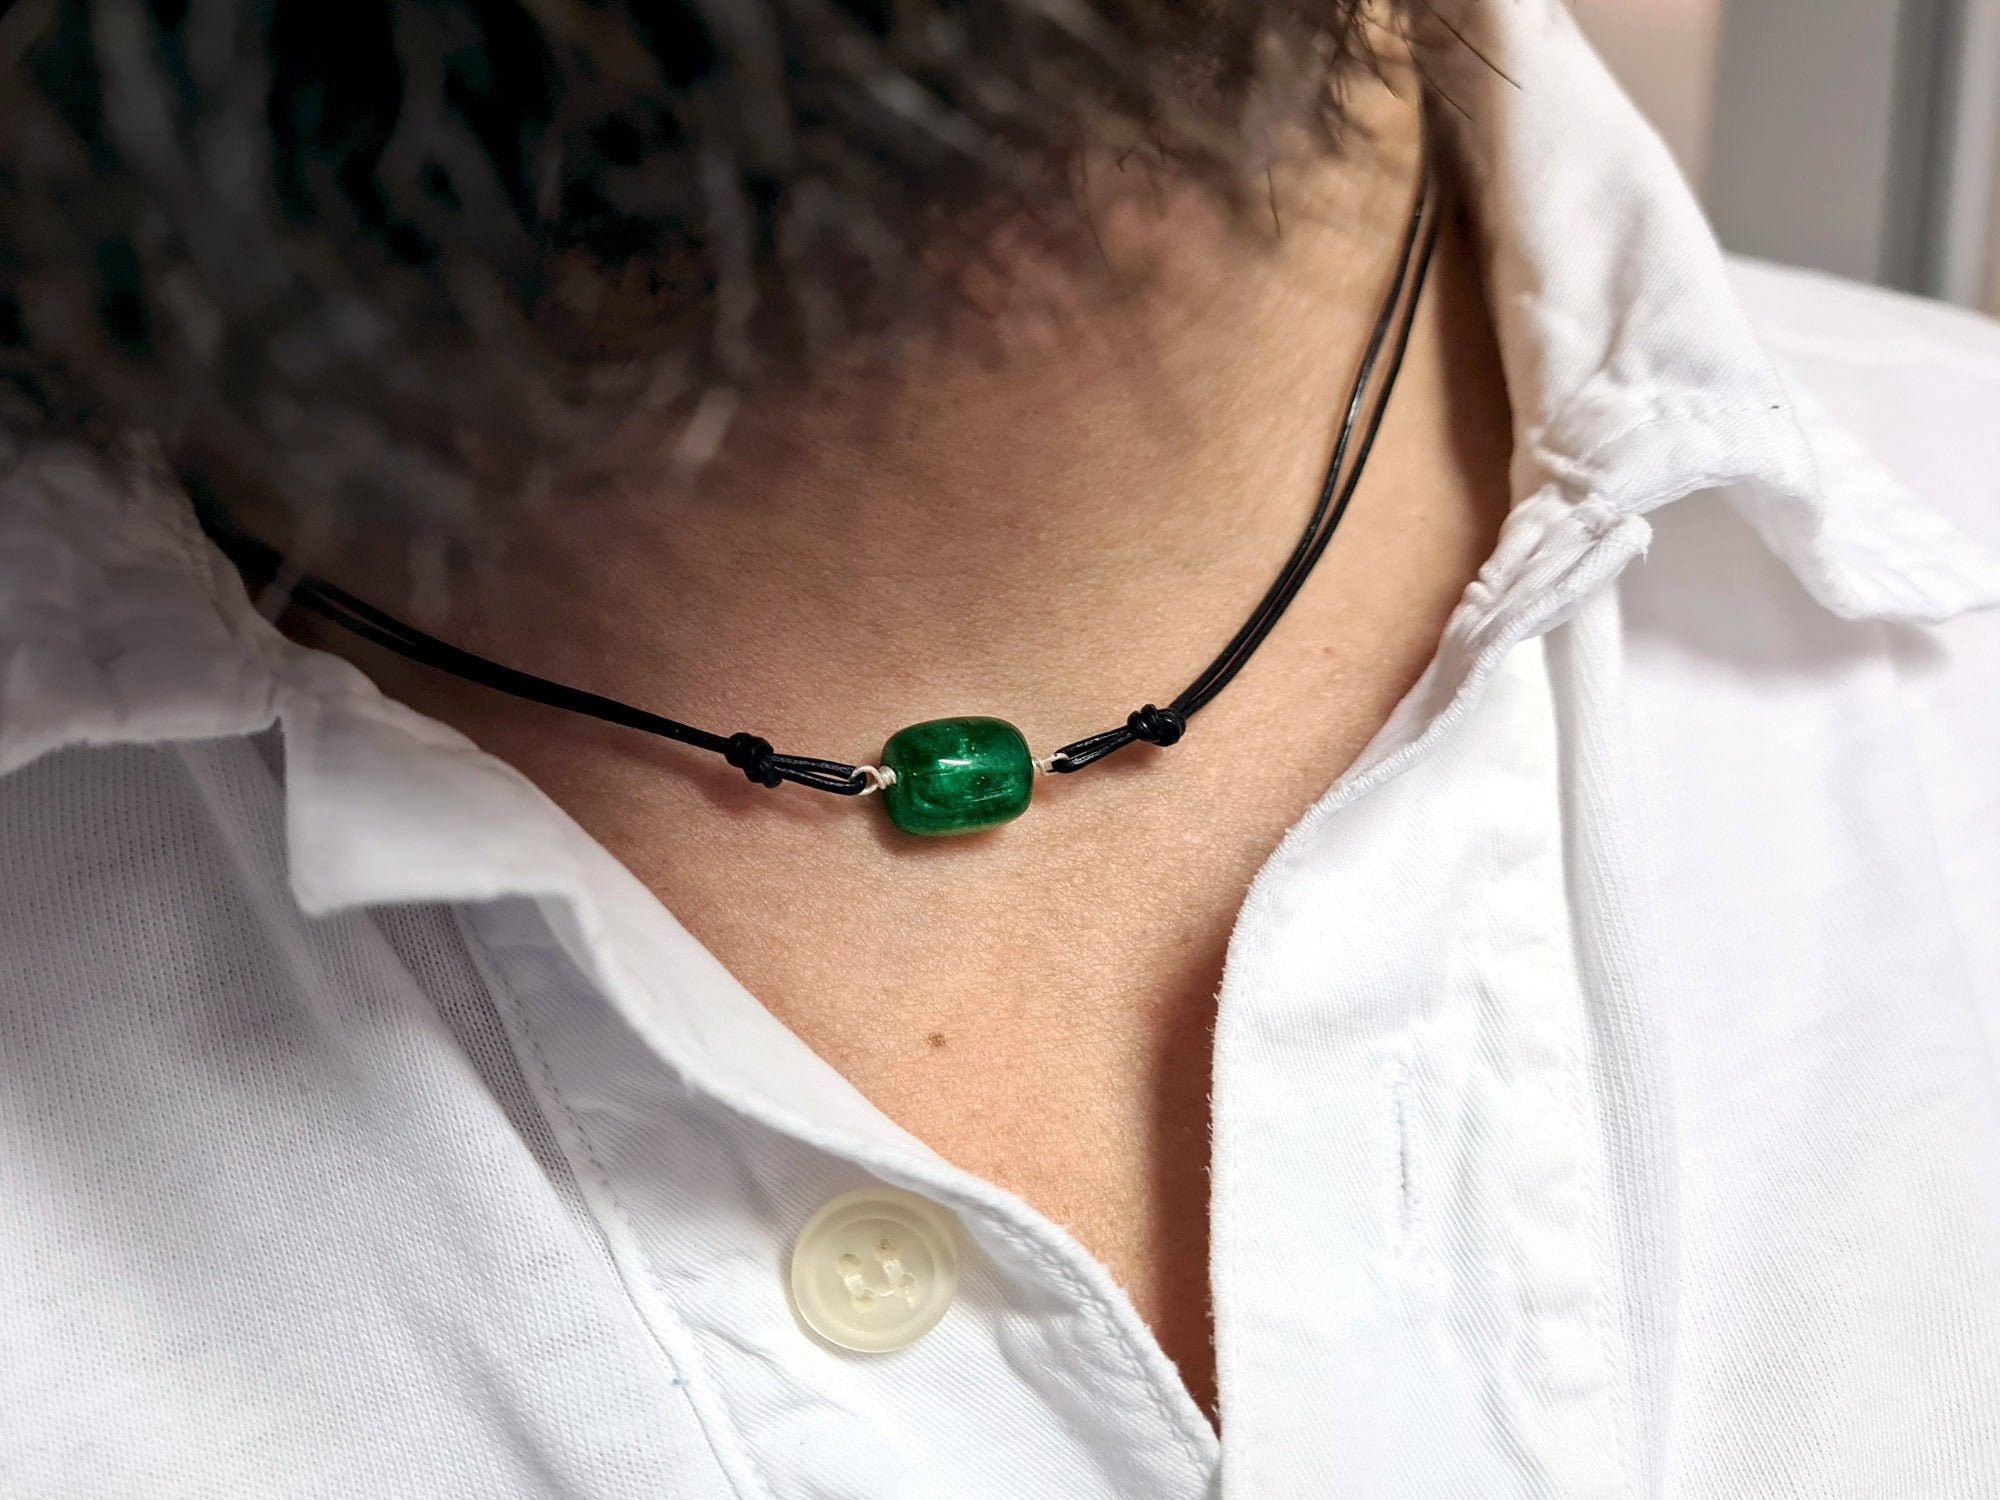 Natural White Jade Necklace Lock Single Stone Pendant Necklace Pendant Mens  Chain With Pendant Designer Jewellery Man Ornate Jewels From  Zezhi_luxury_jewelry, $4.22 | DHgate.Com